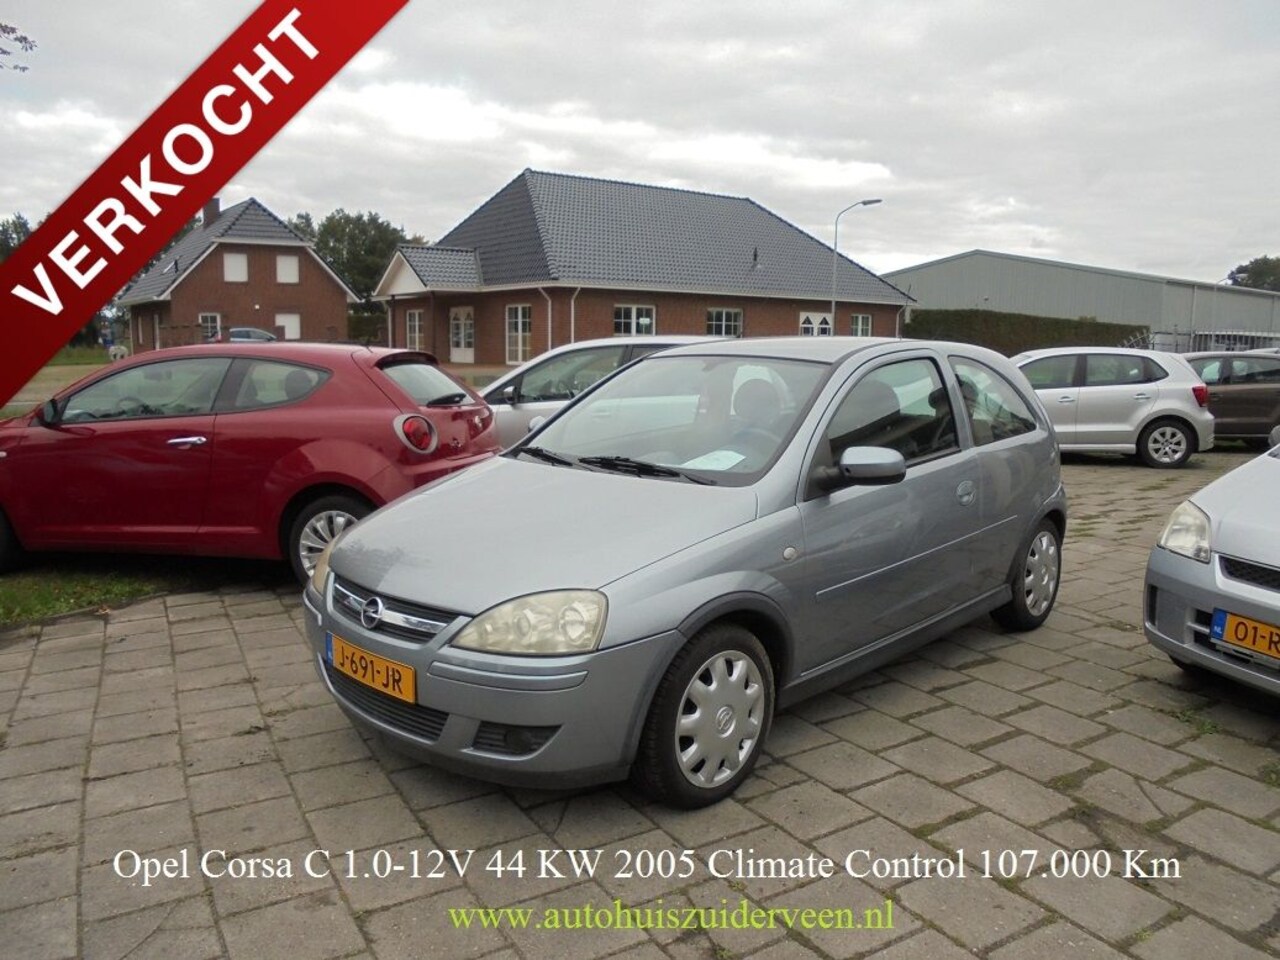 Opel Corsa - 1.0-12V 2005 Climate Control 107.000 Km - AutoWereld.nl